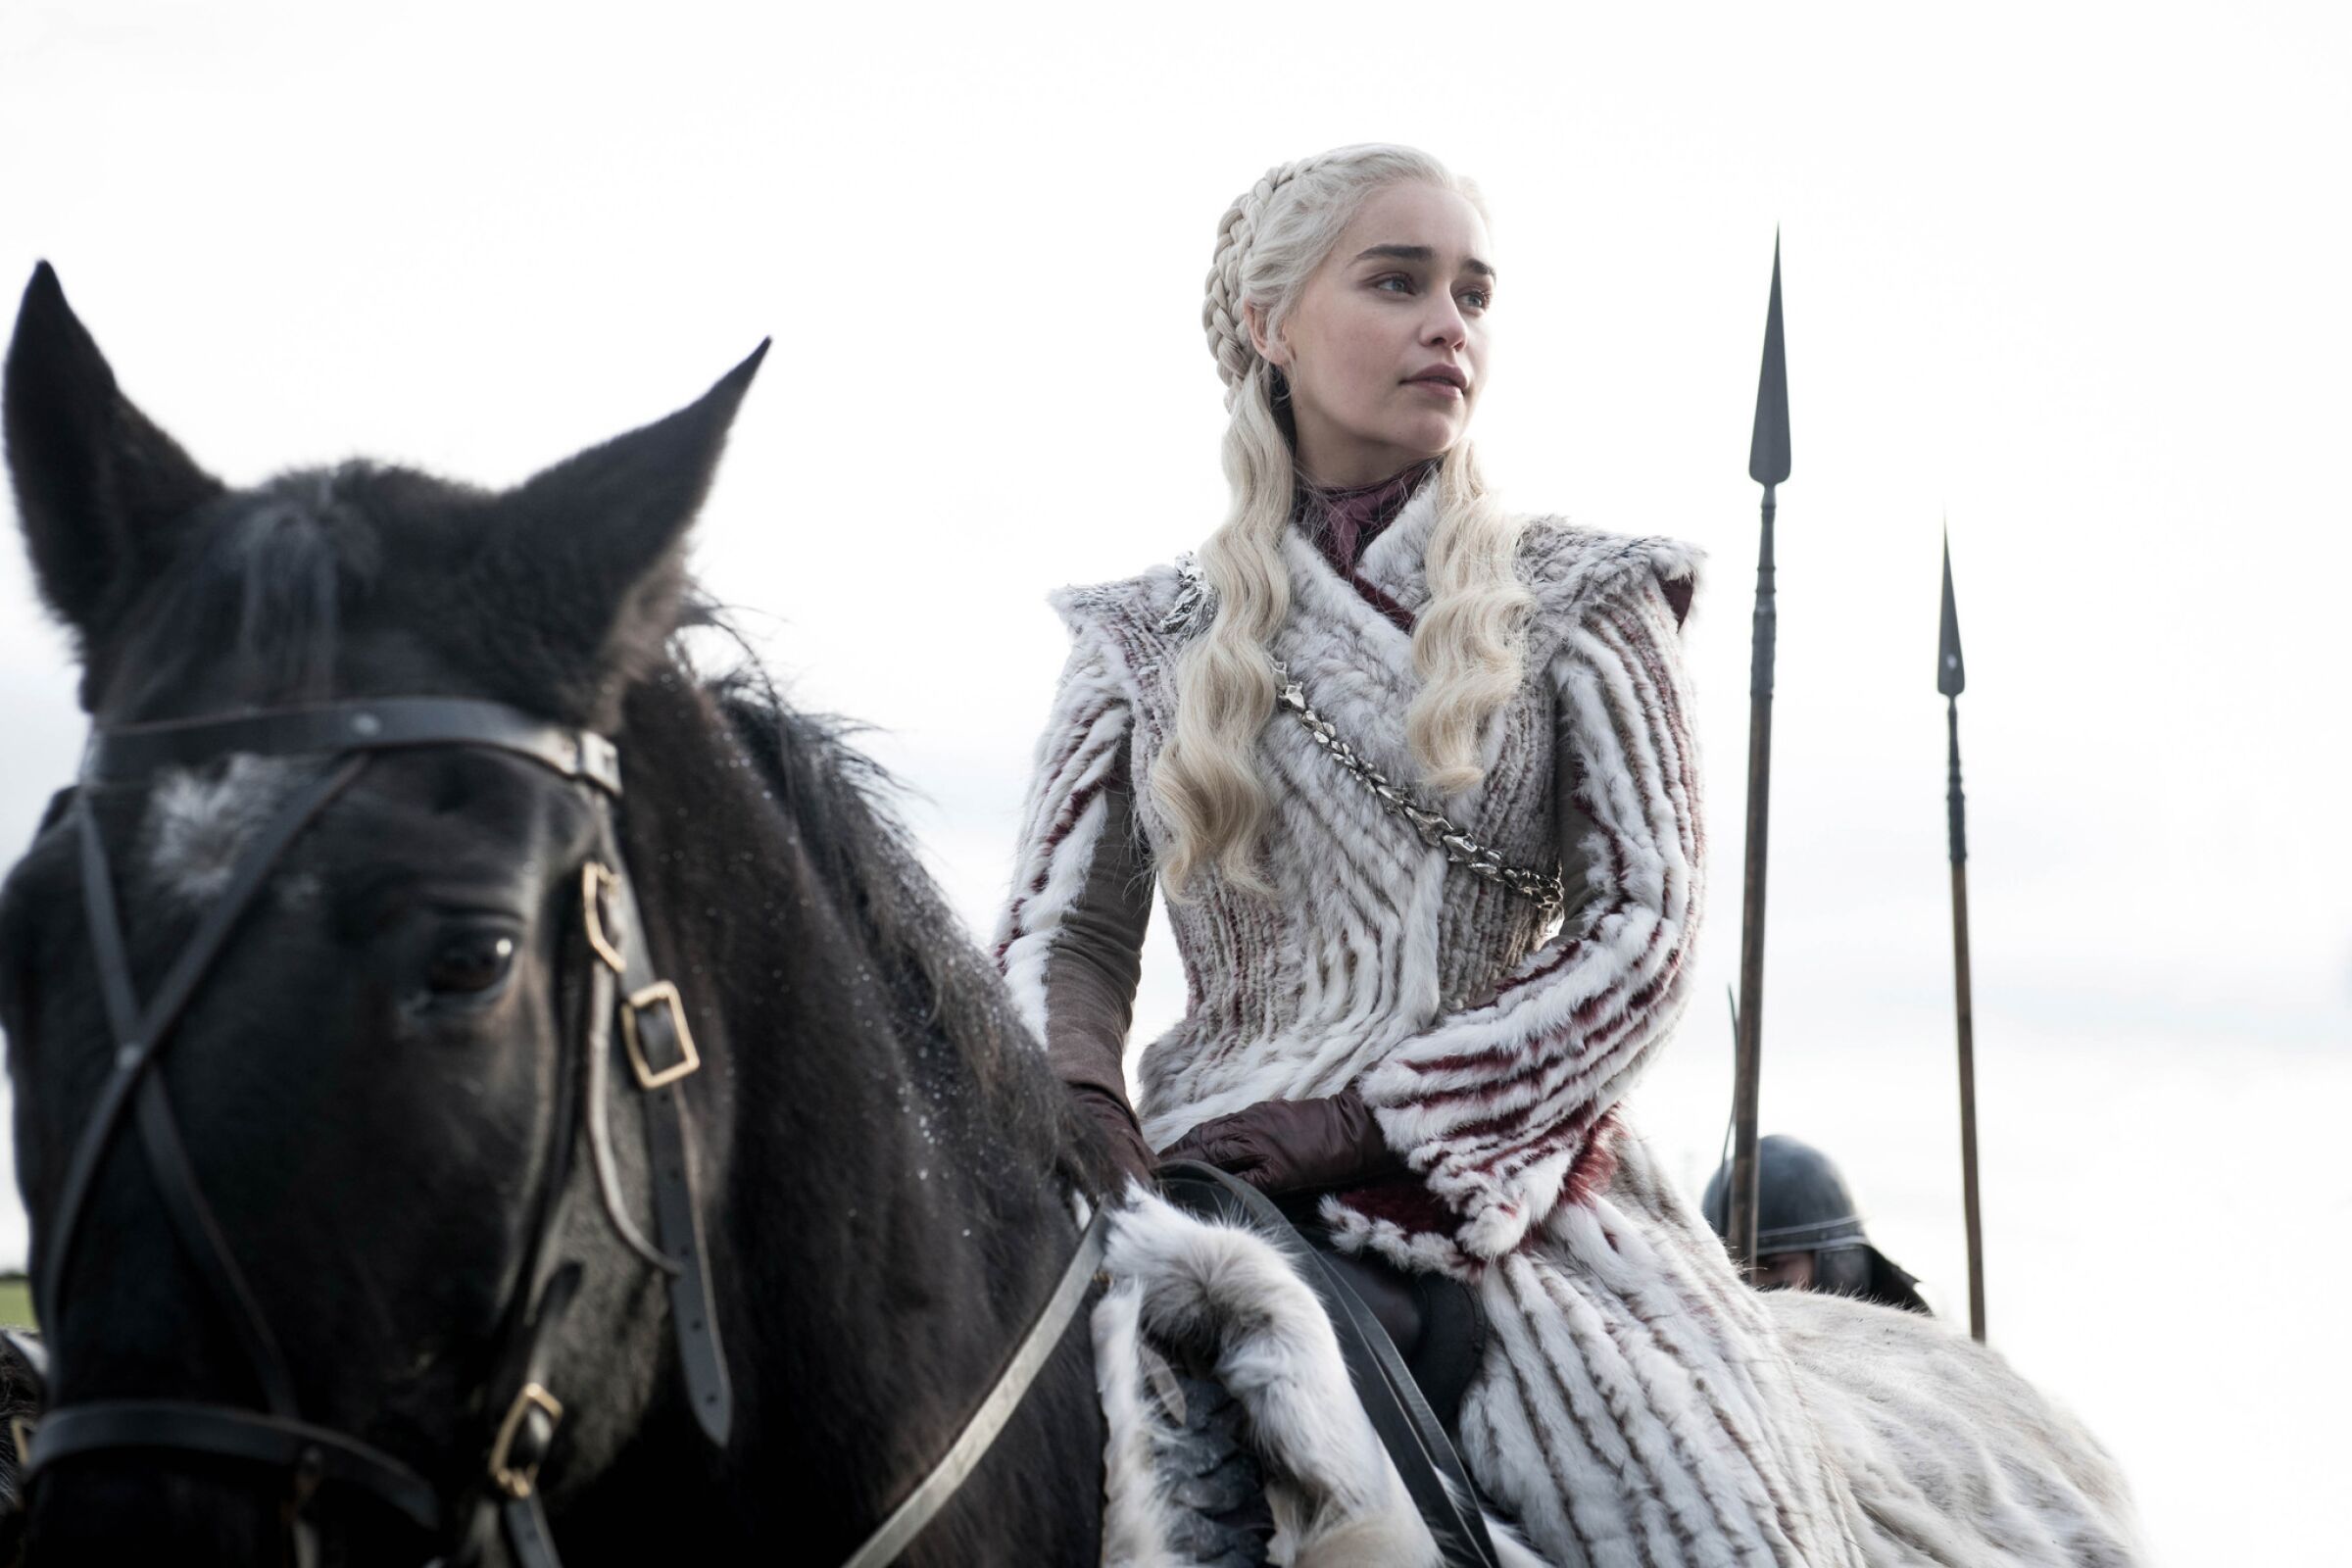 Emilia Clarke as Daenerys Targaryen in the final season of "Game of Thrones."